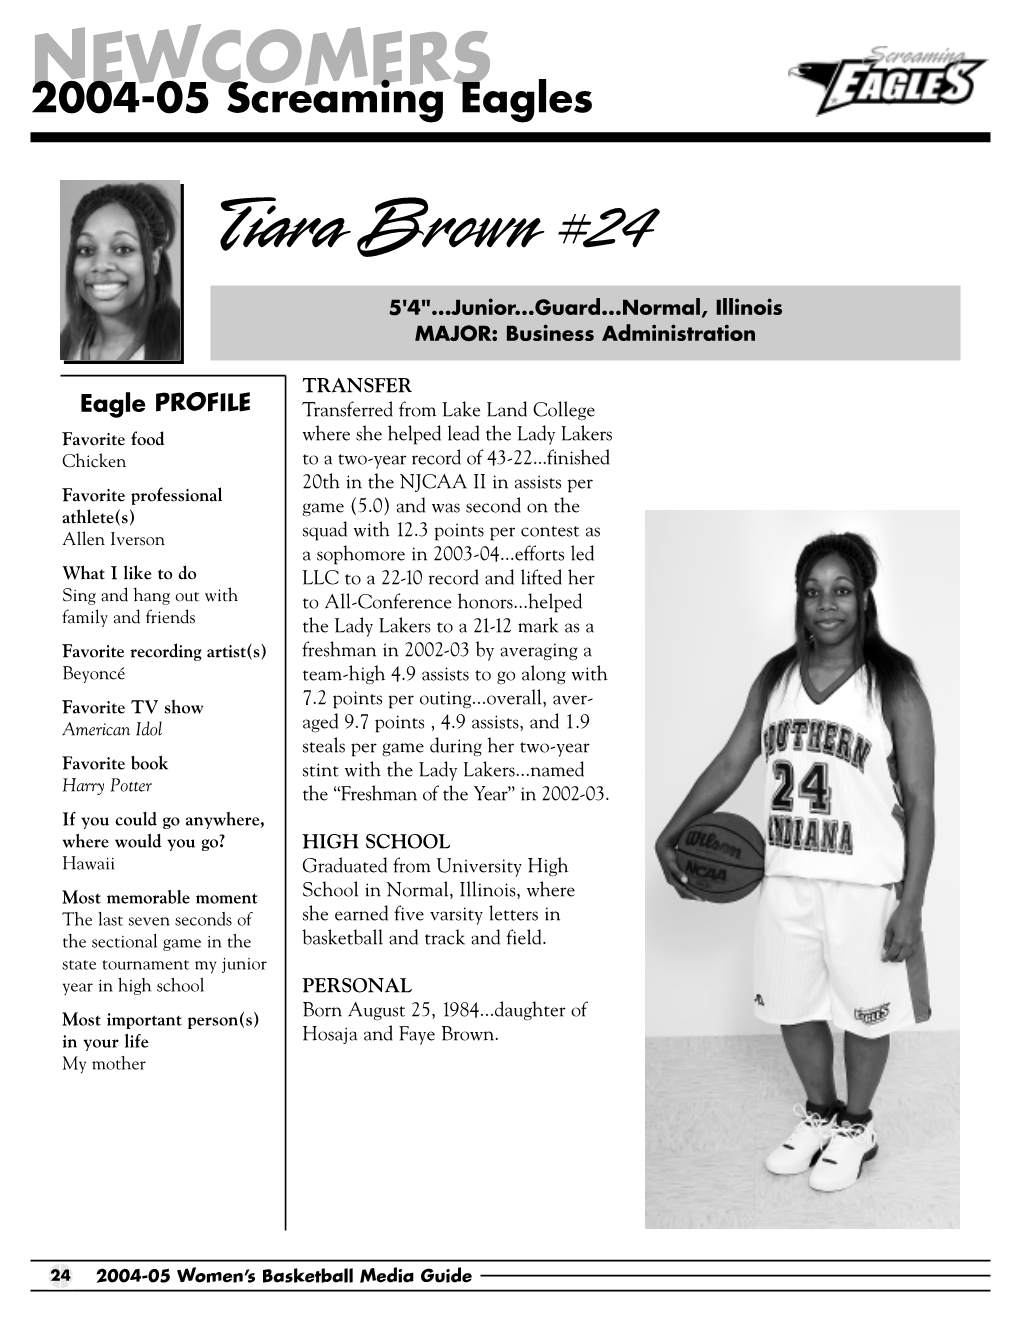 Tiara Brown #24